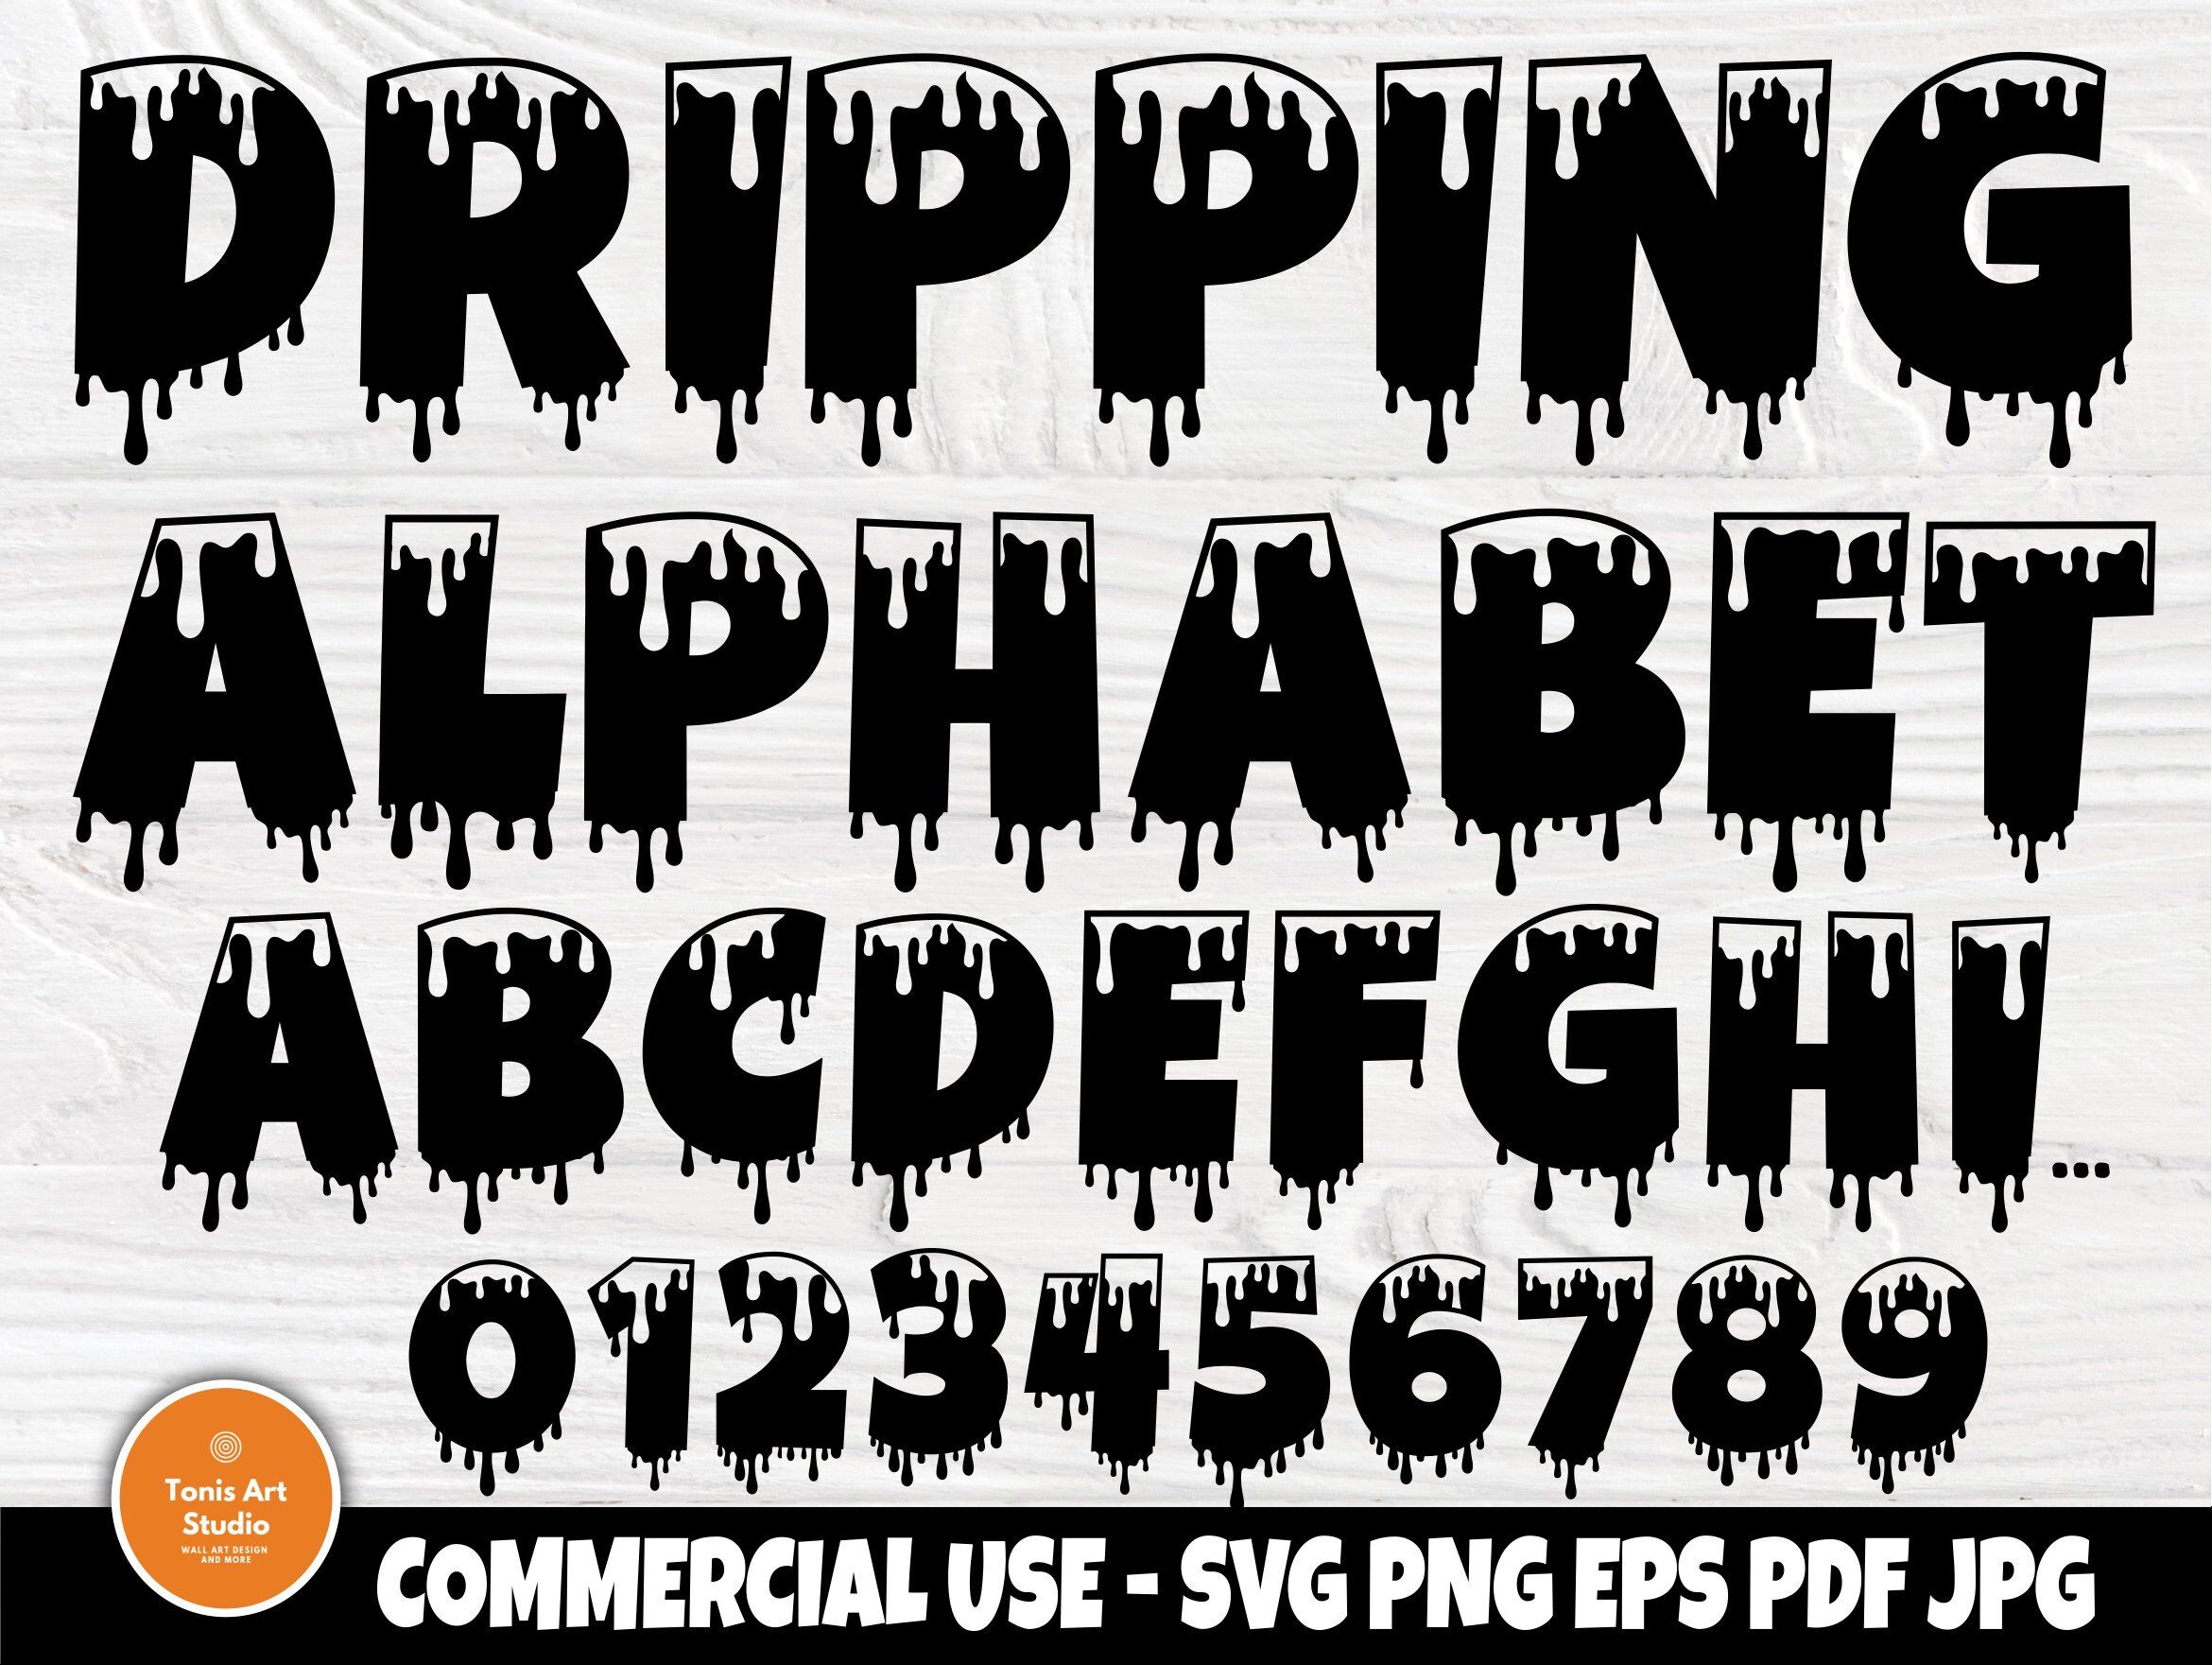 Drip Drop SVG File Print Art SVG and Print Art at